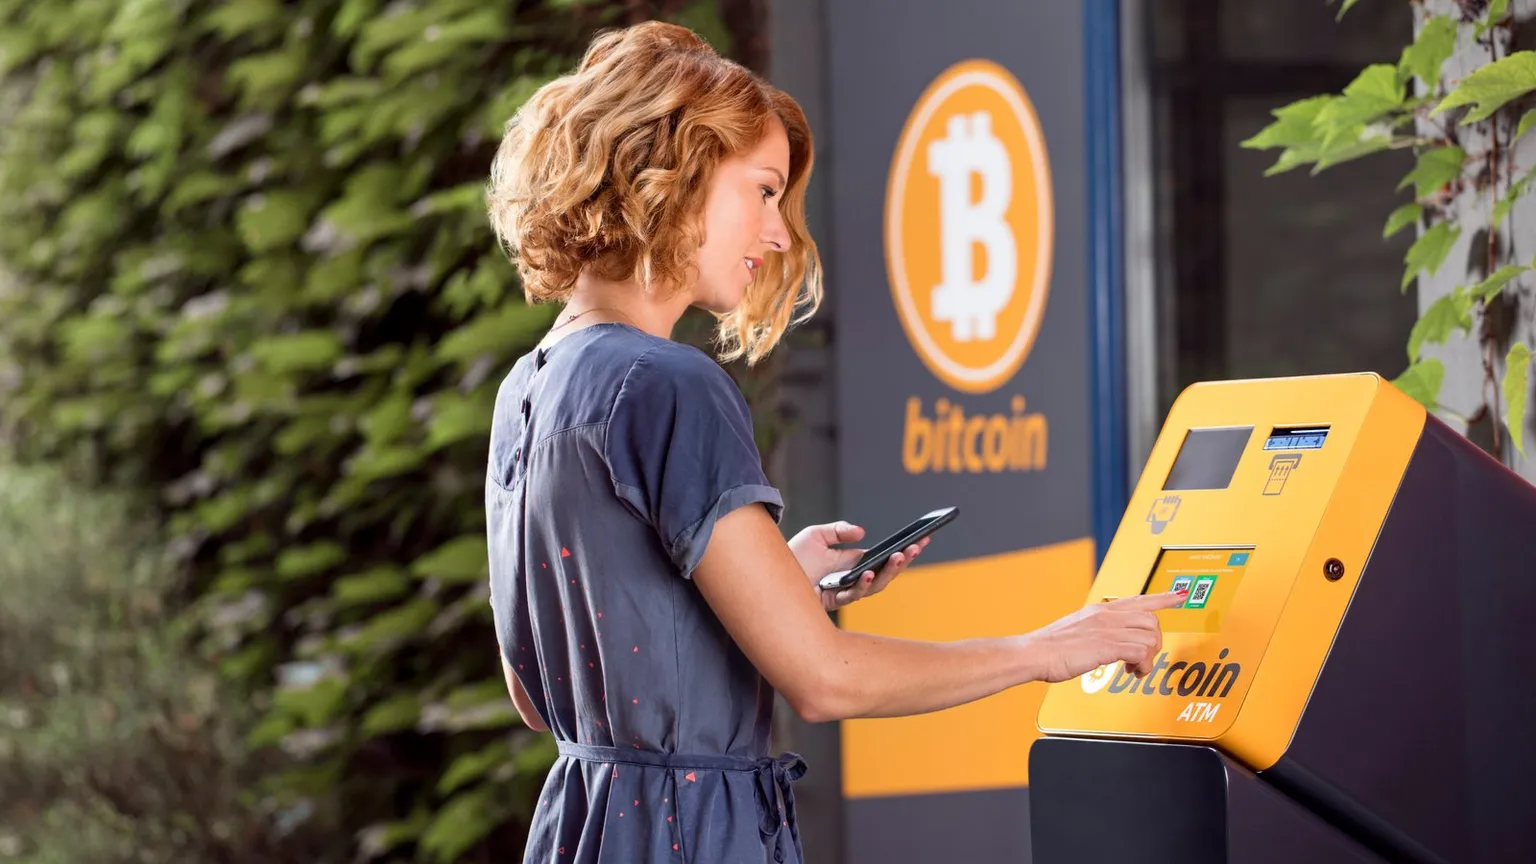 Bitcoin ATM. Image: Shutterstock